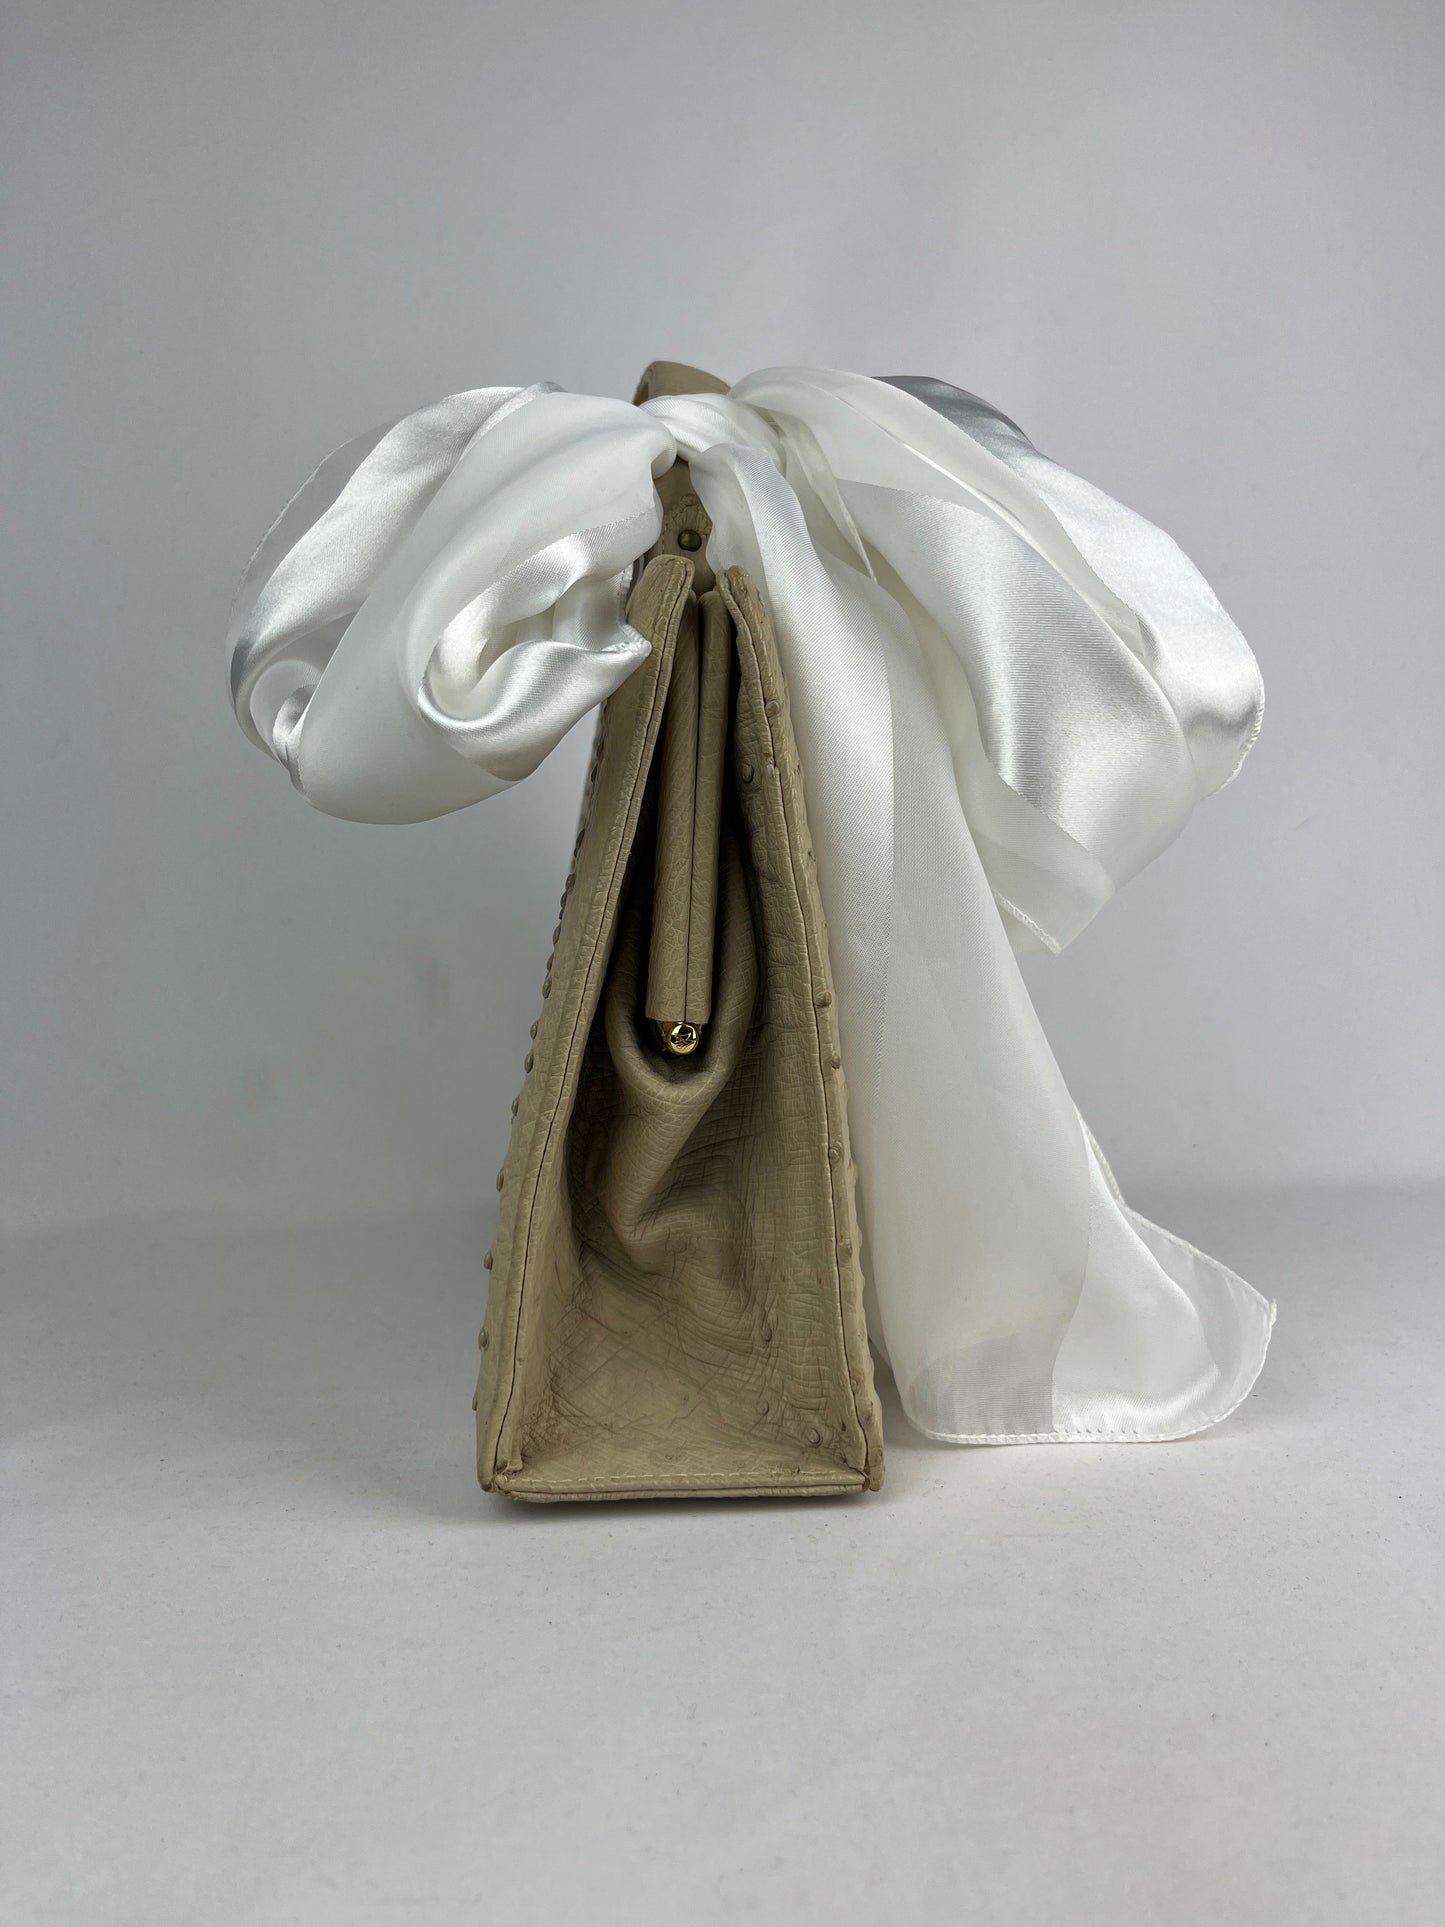 Vintage Genuine Leather Handbag by Fiorenza